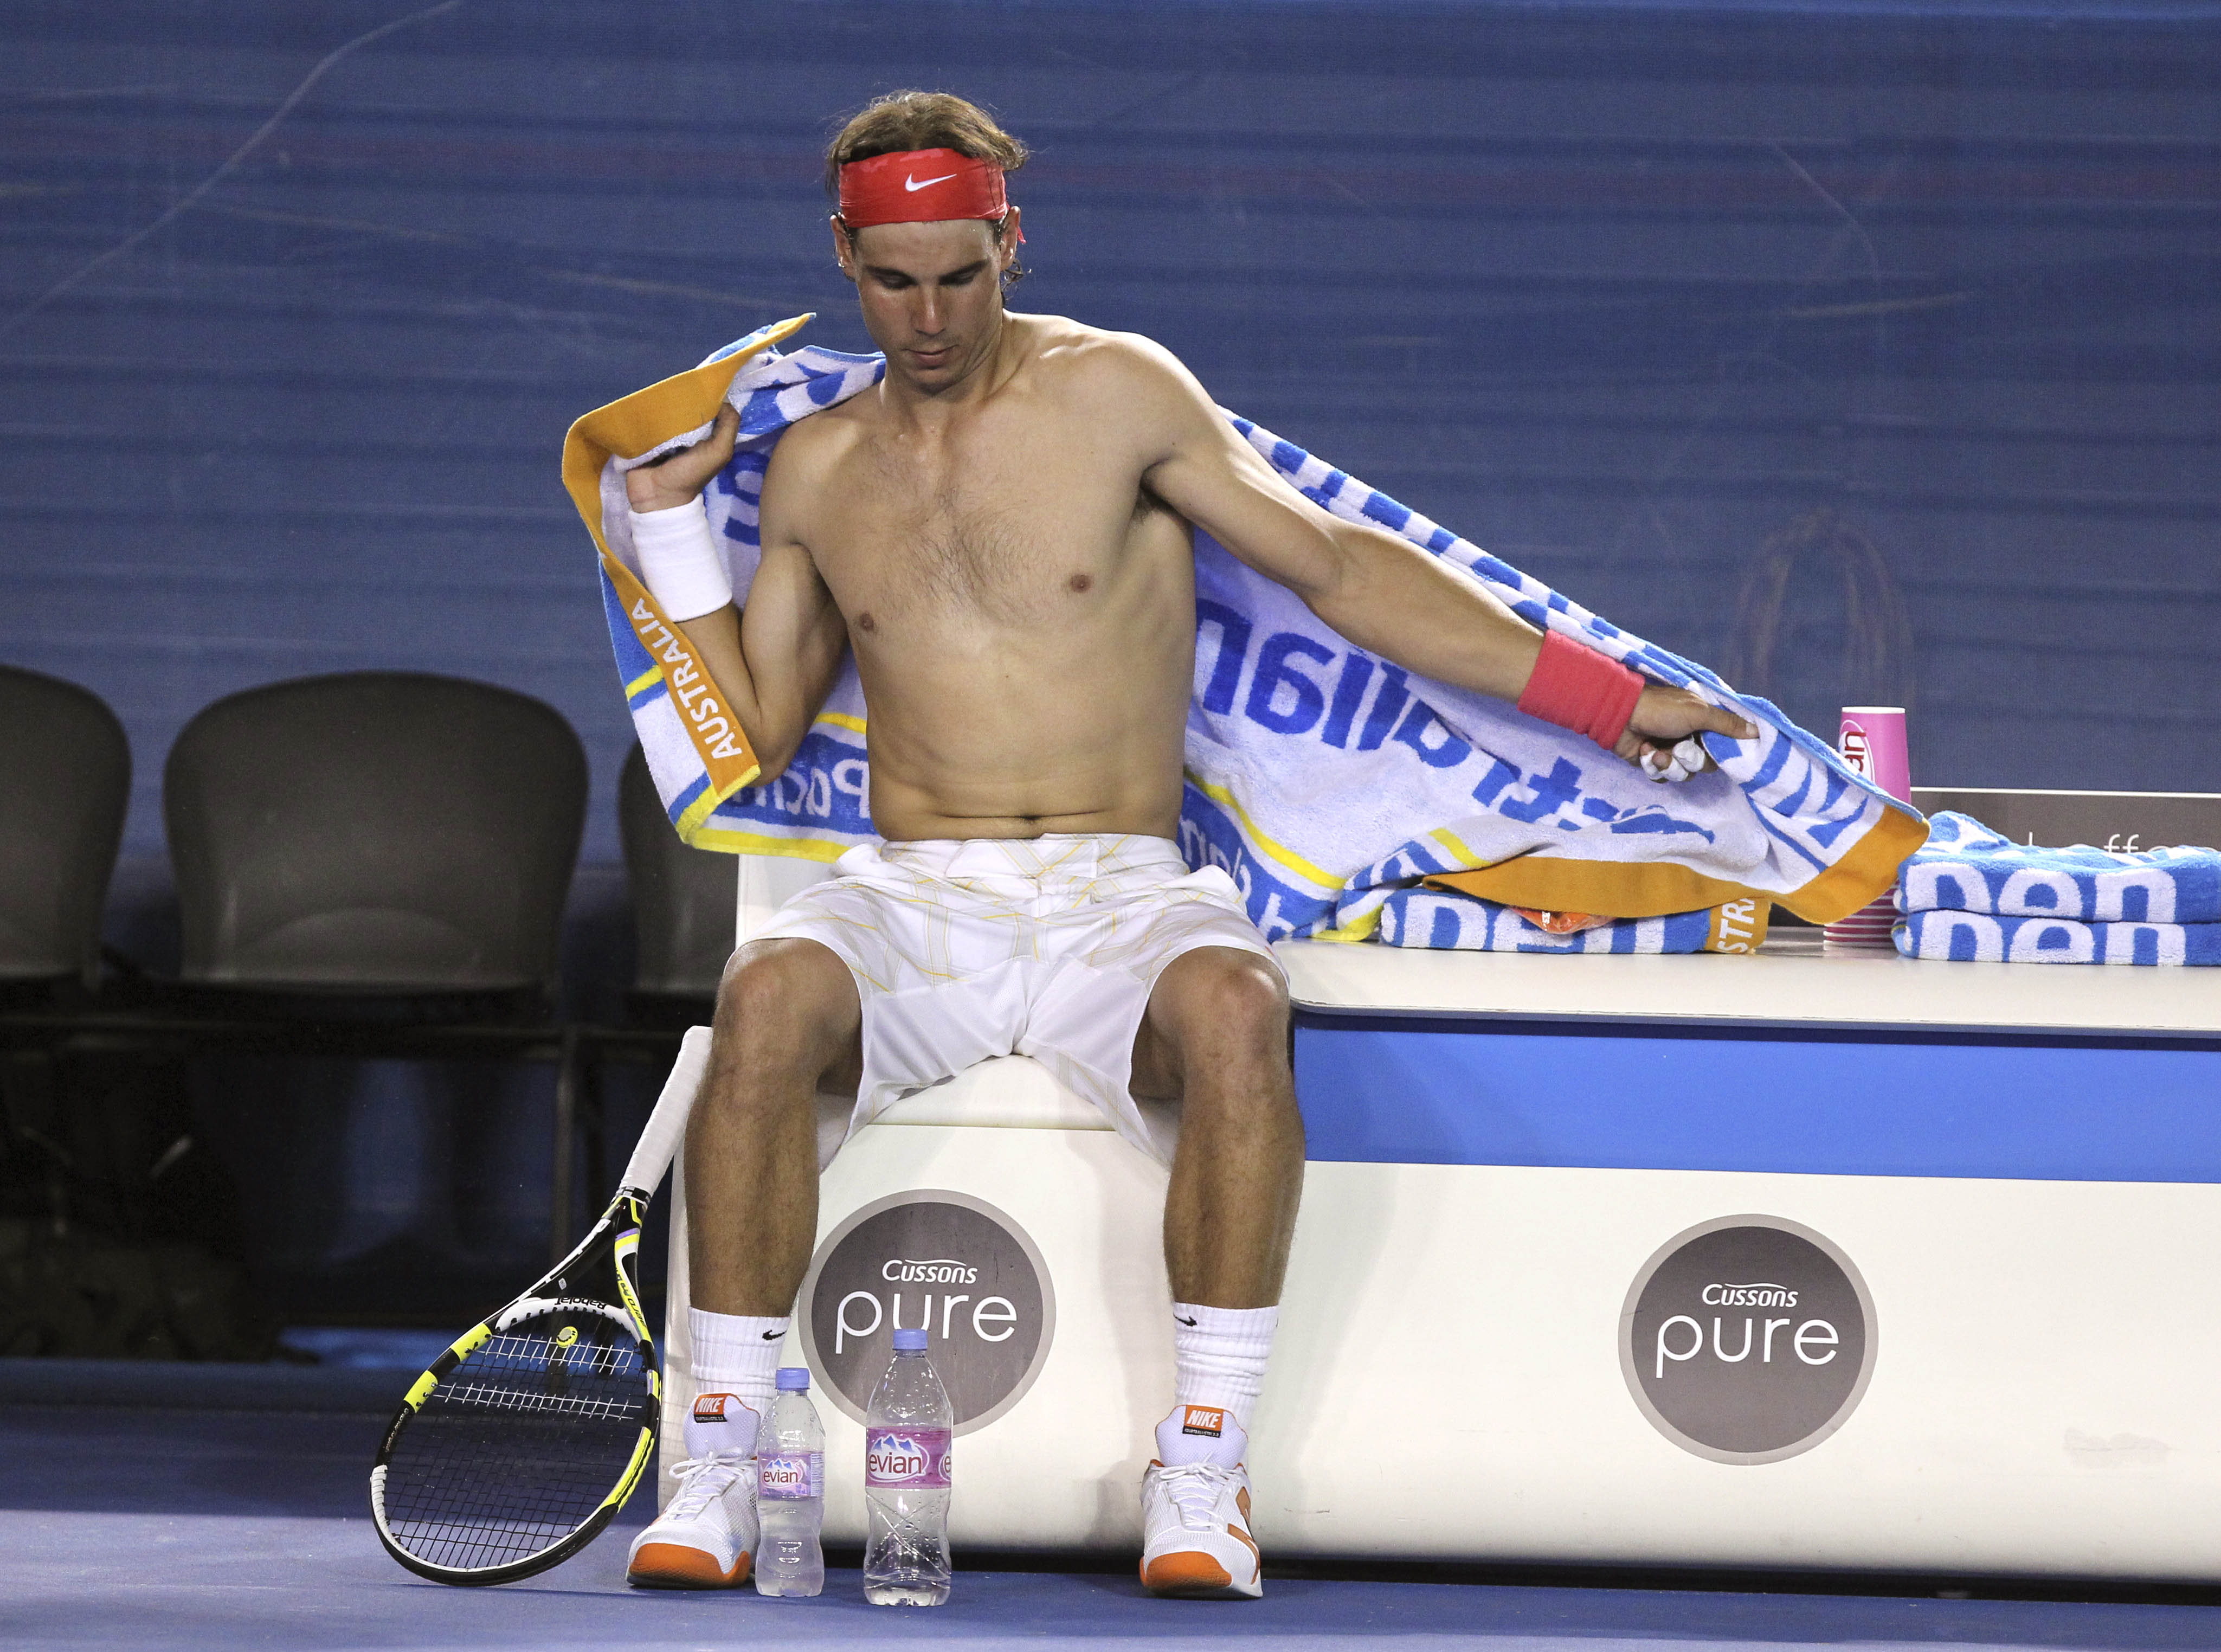 Andy Roddick, Australian Open, Tennis, Andy Murray, Roger Federer, Kim Clijsters, Rafael Nadal, Juan Martin del Potro